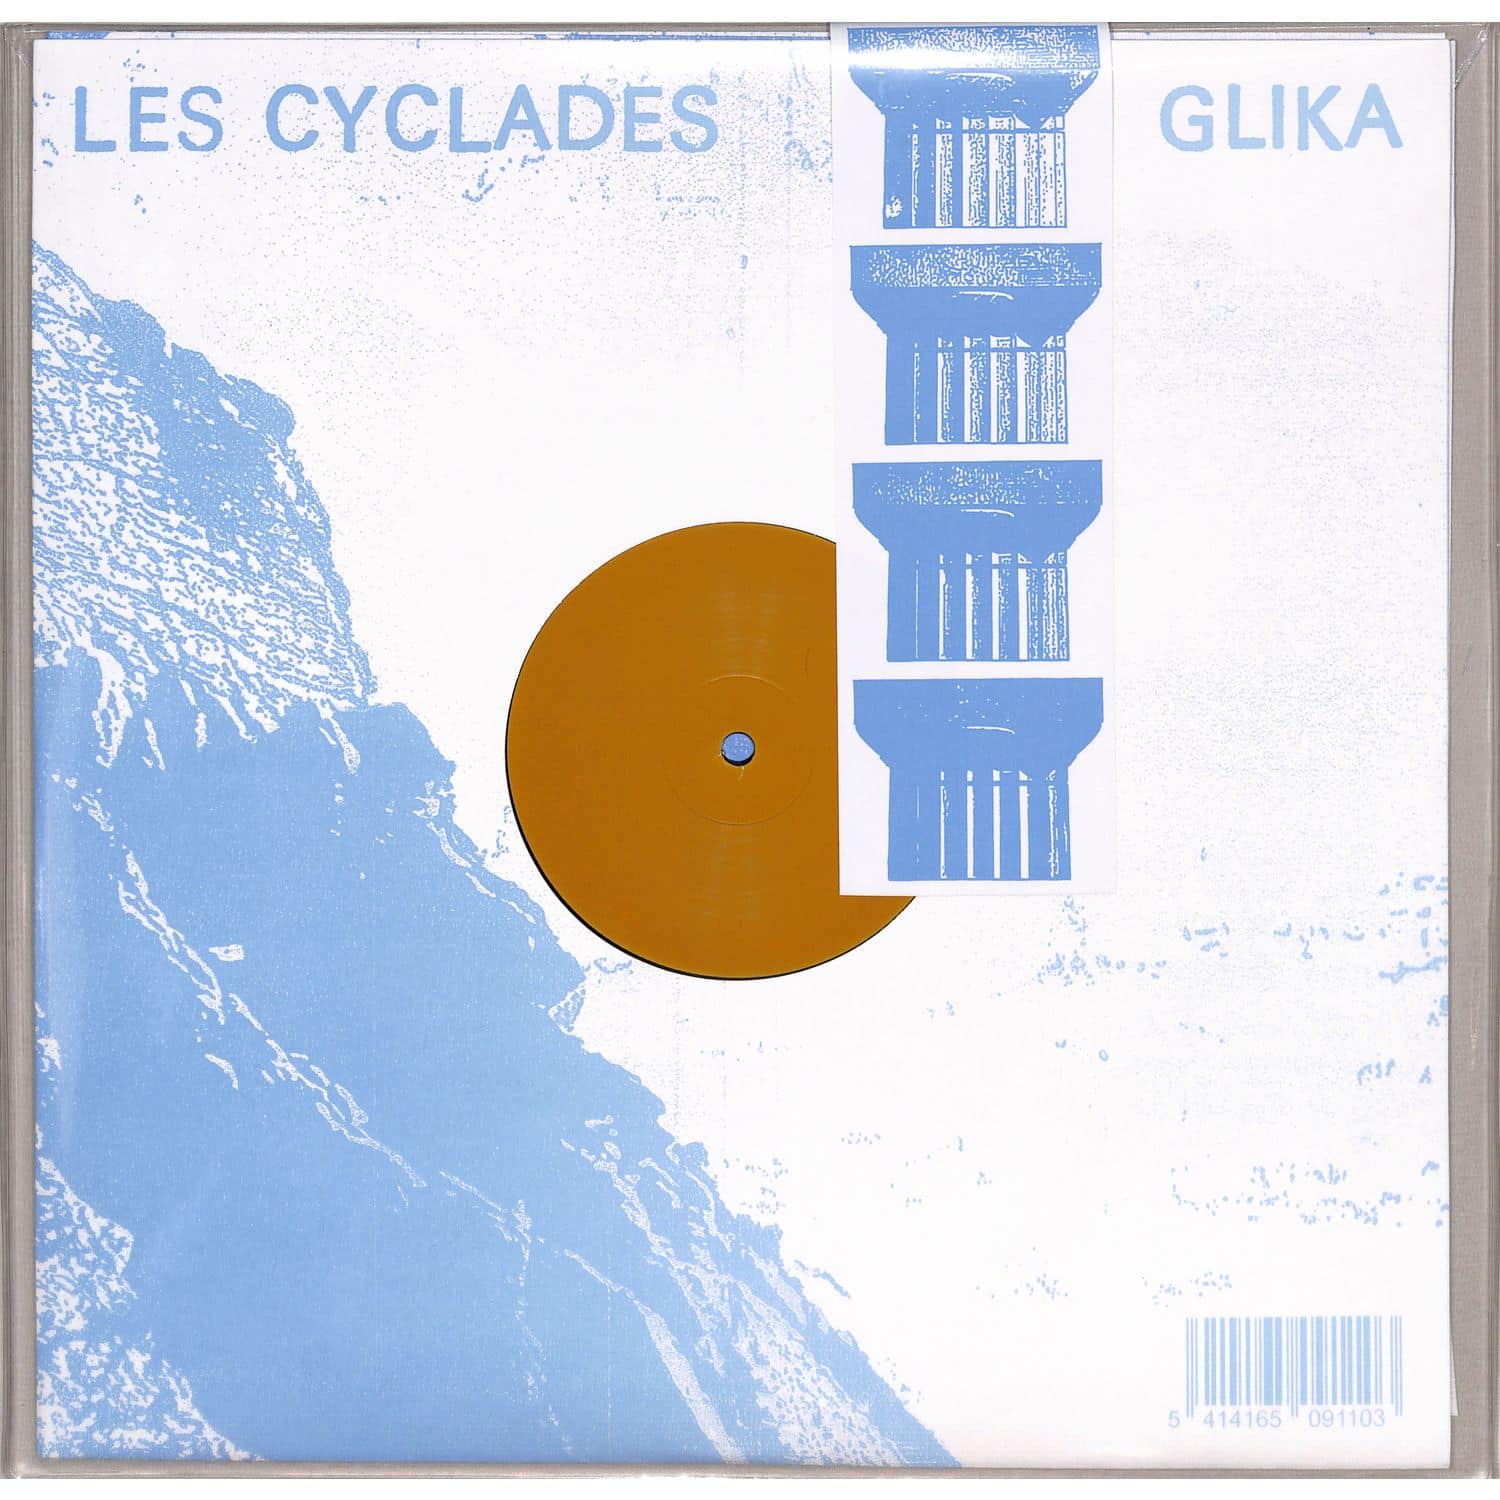 Les Cyclades - GLIKA 